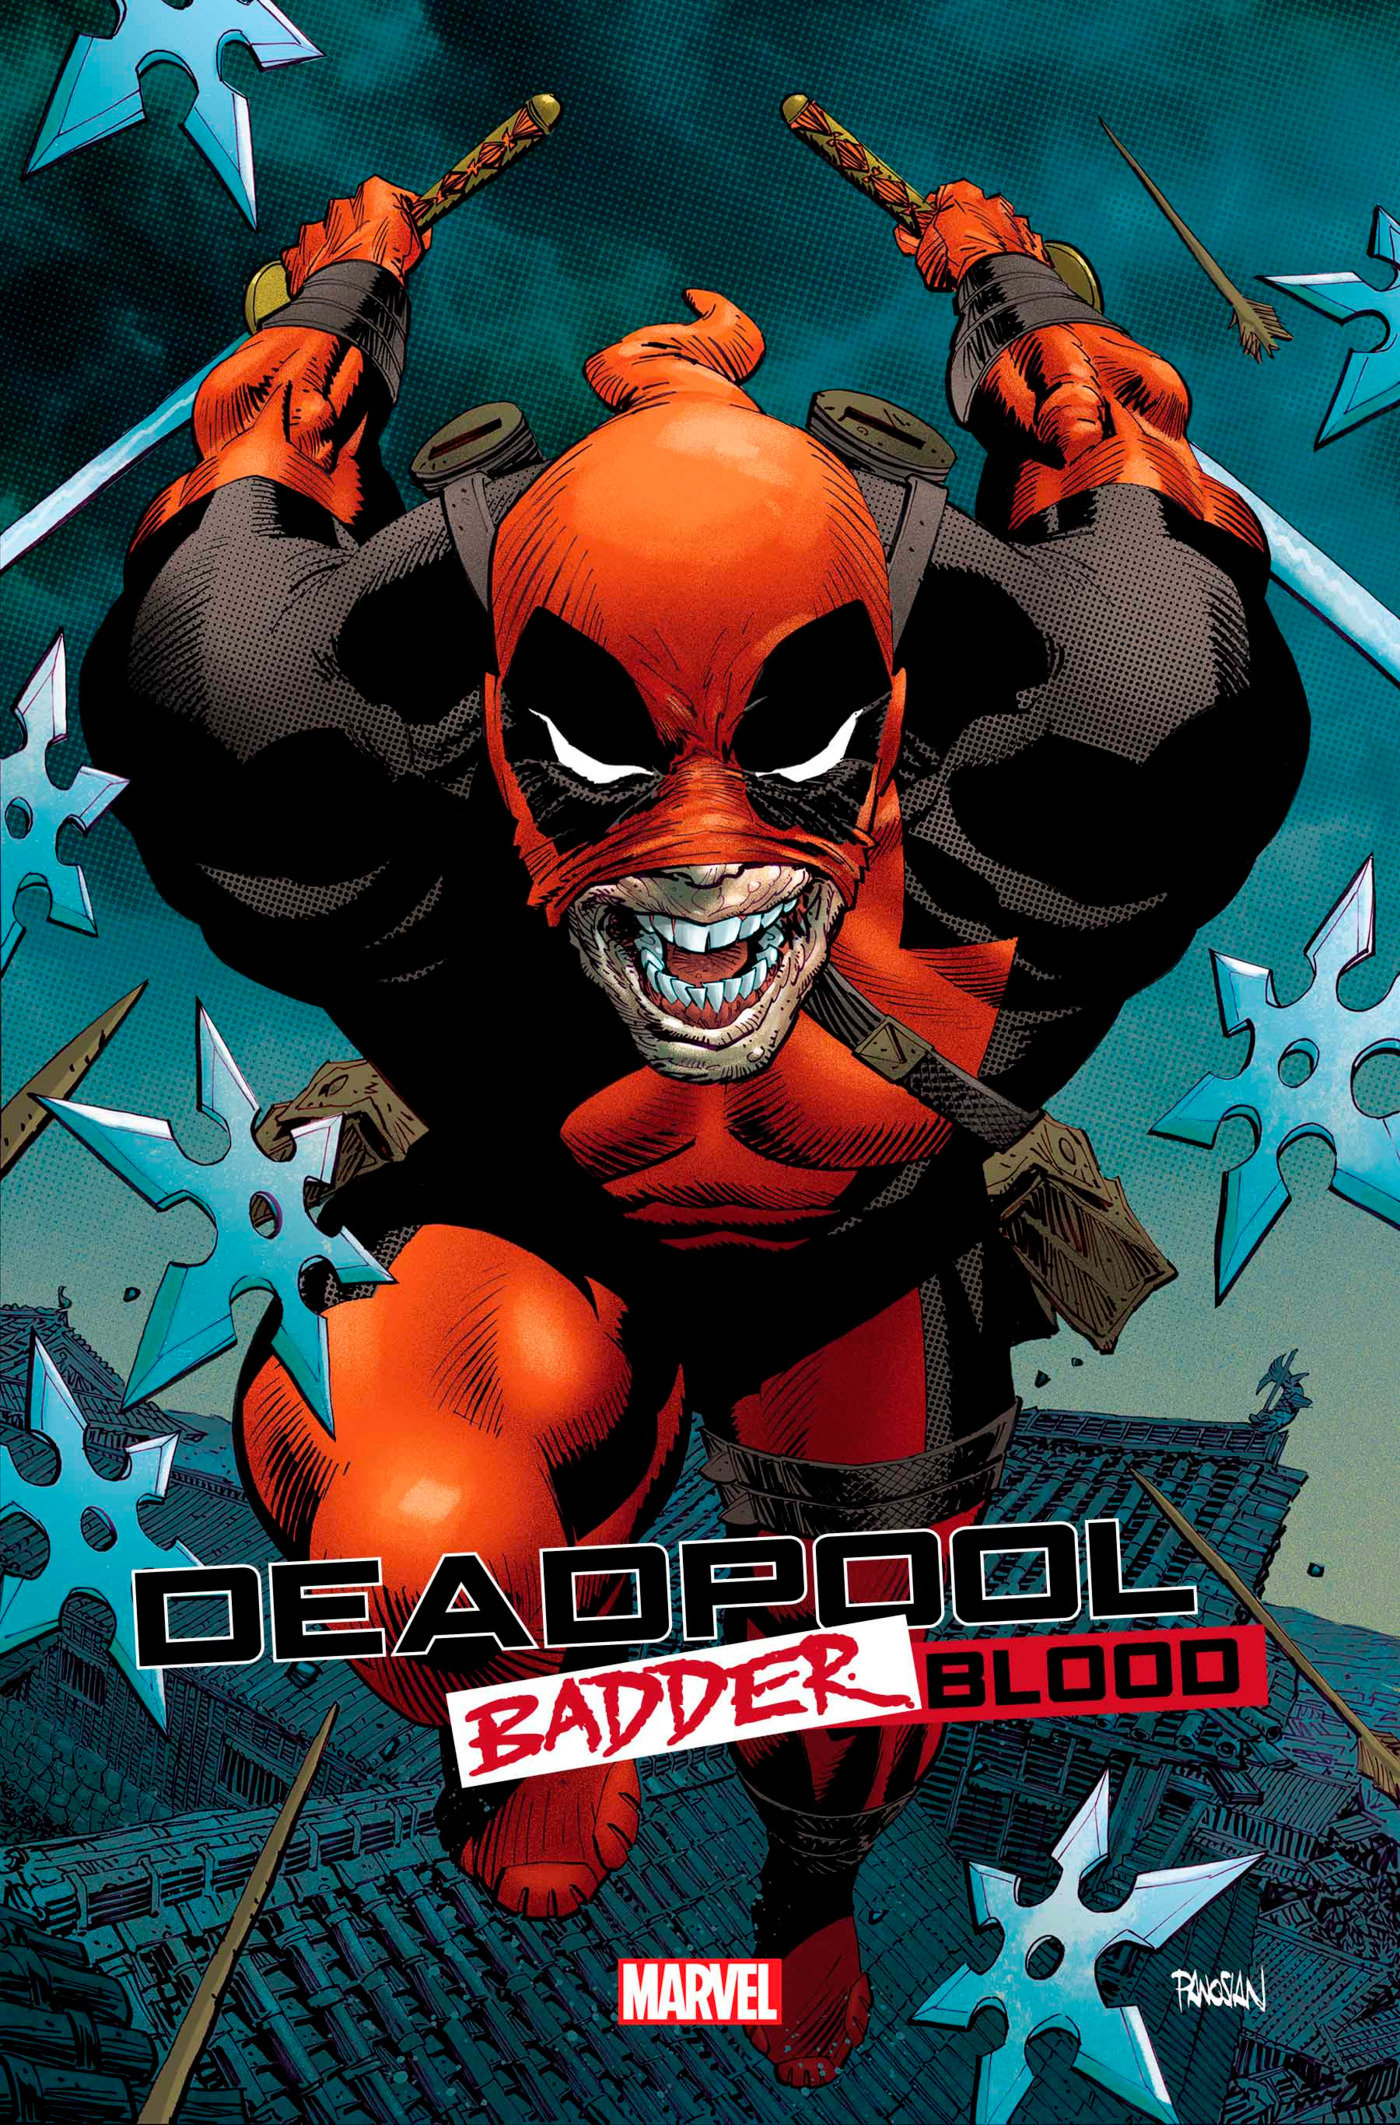 Deadpool: Badder Blood #1 Dan Panosian Variant